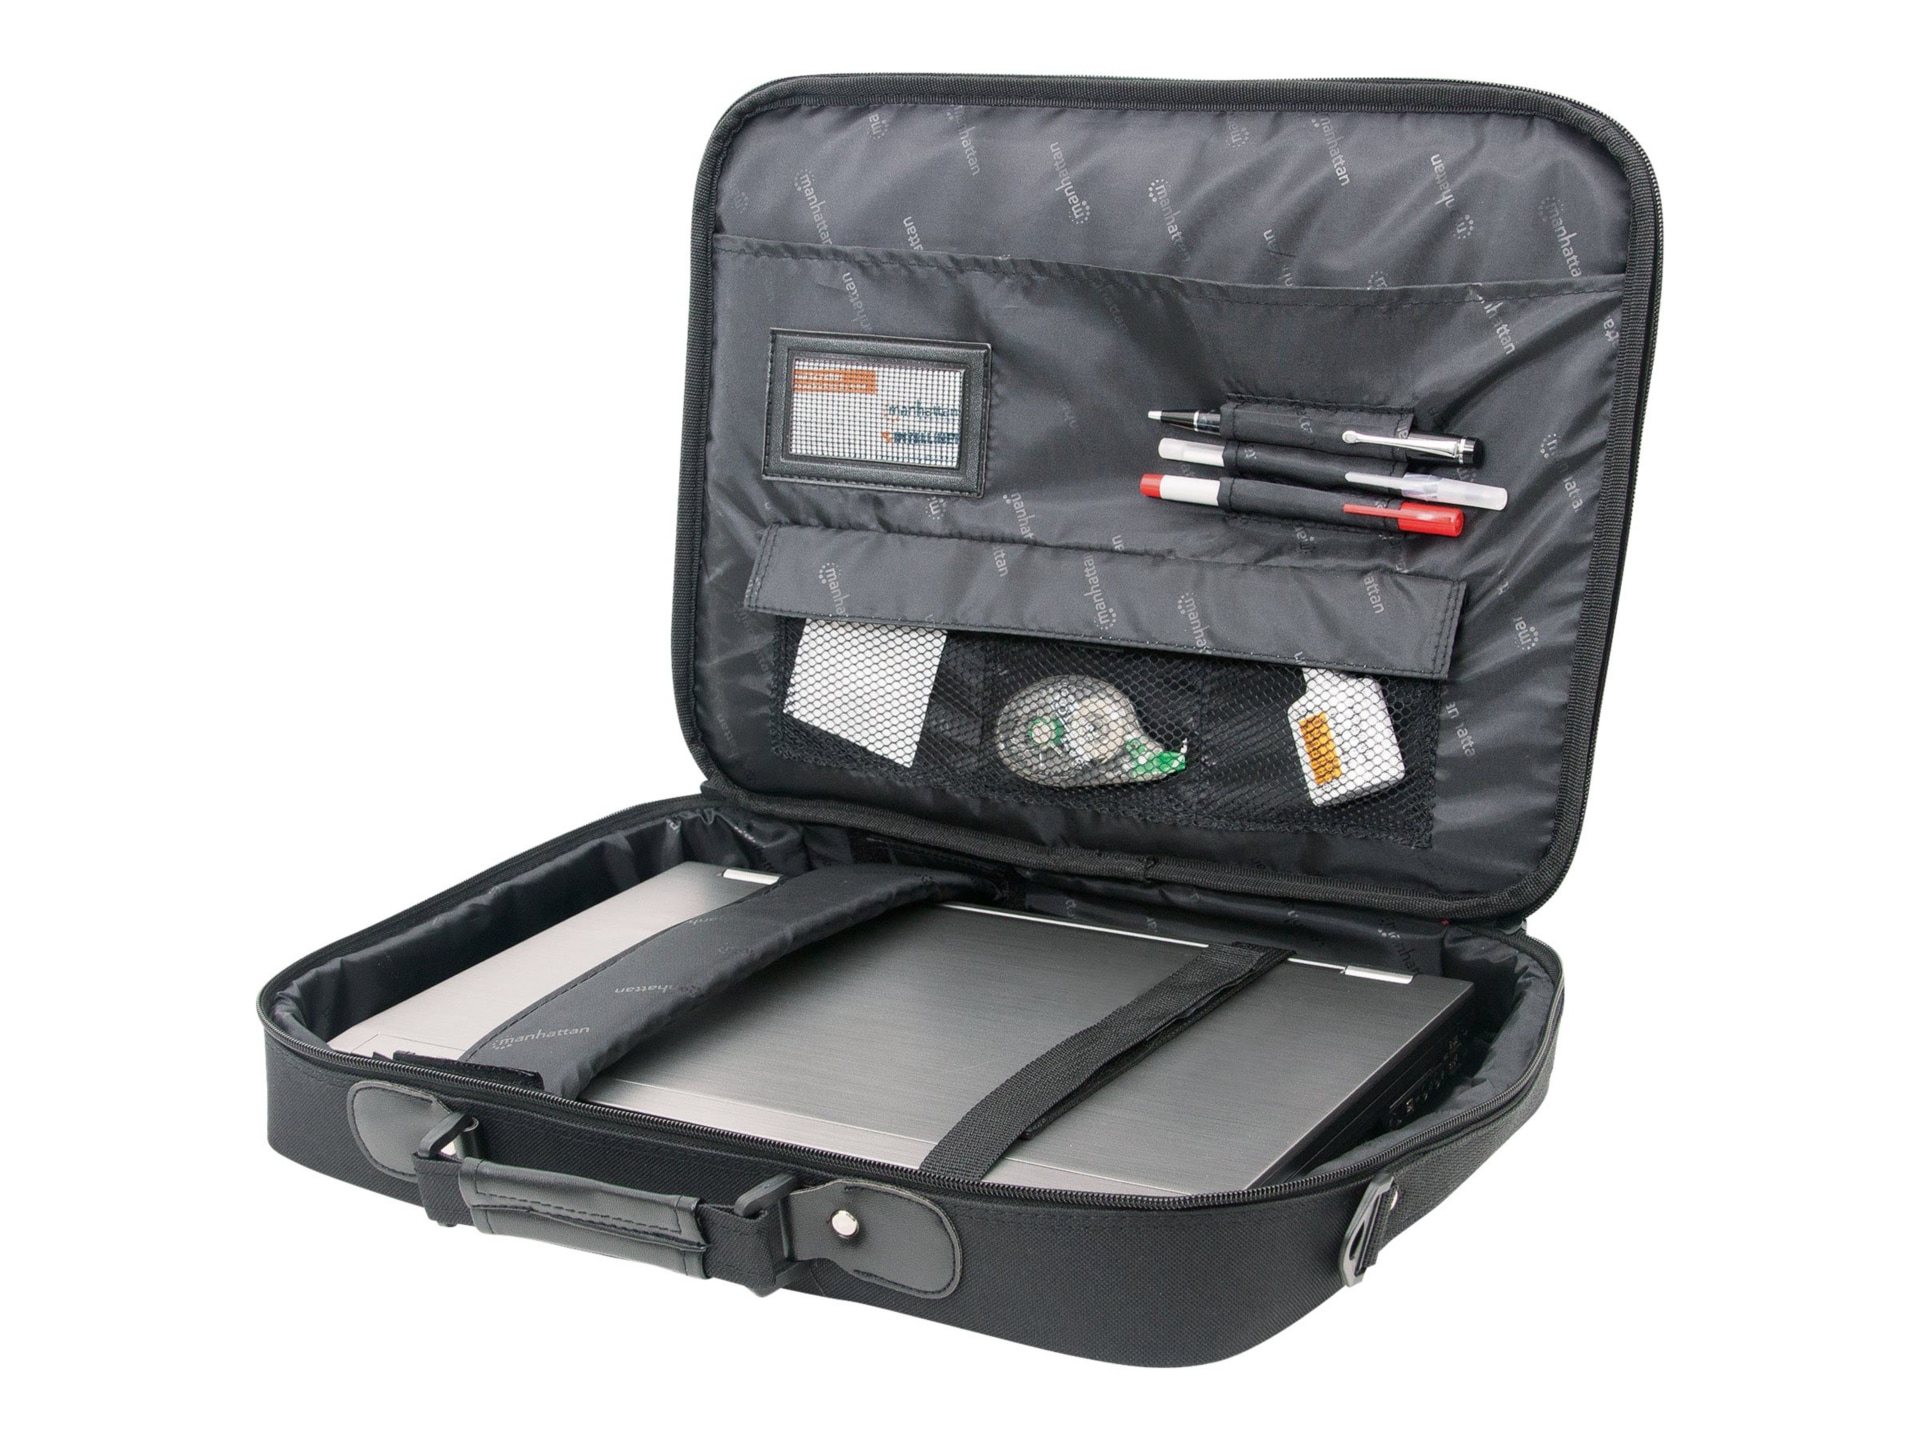 Manhattan Empire Laptop Bag 17.3", Clamshell design, Accessories Pocket, Sh